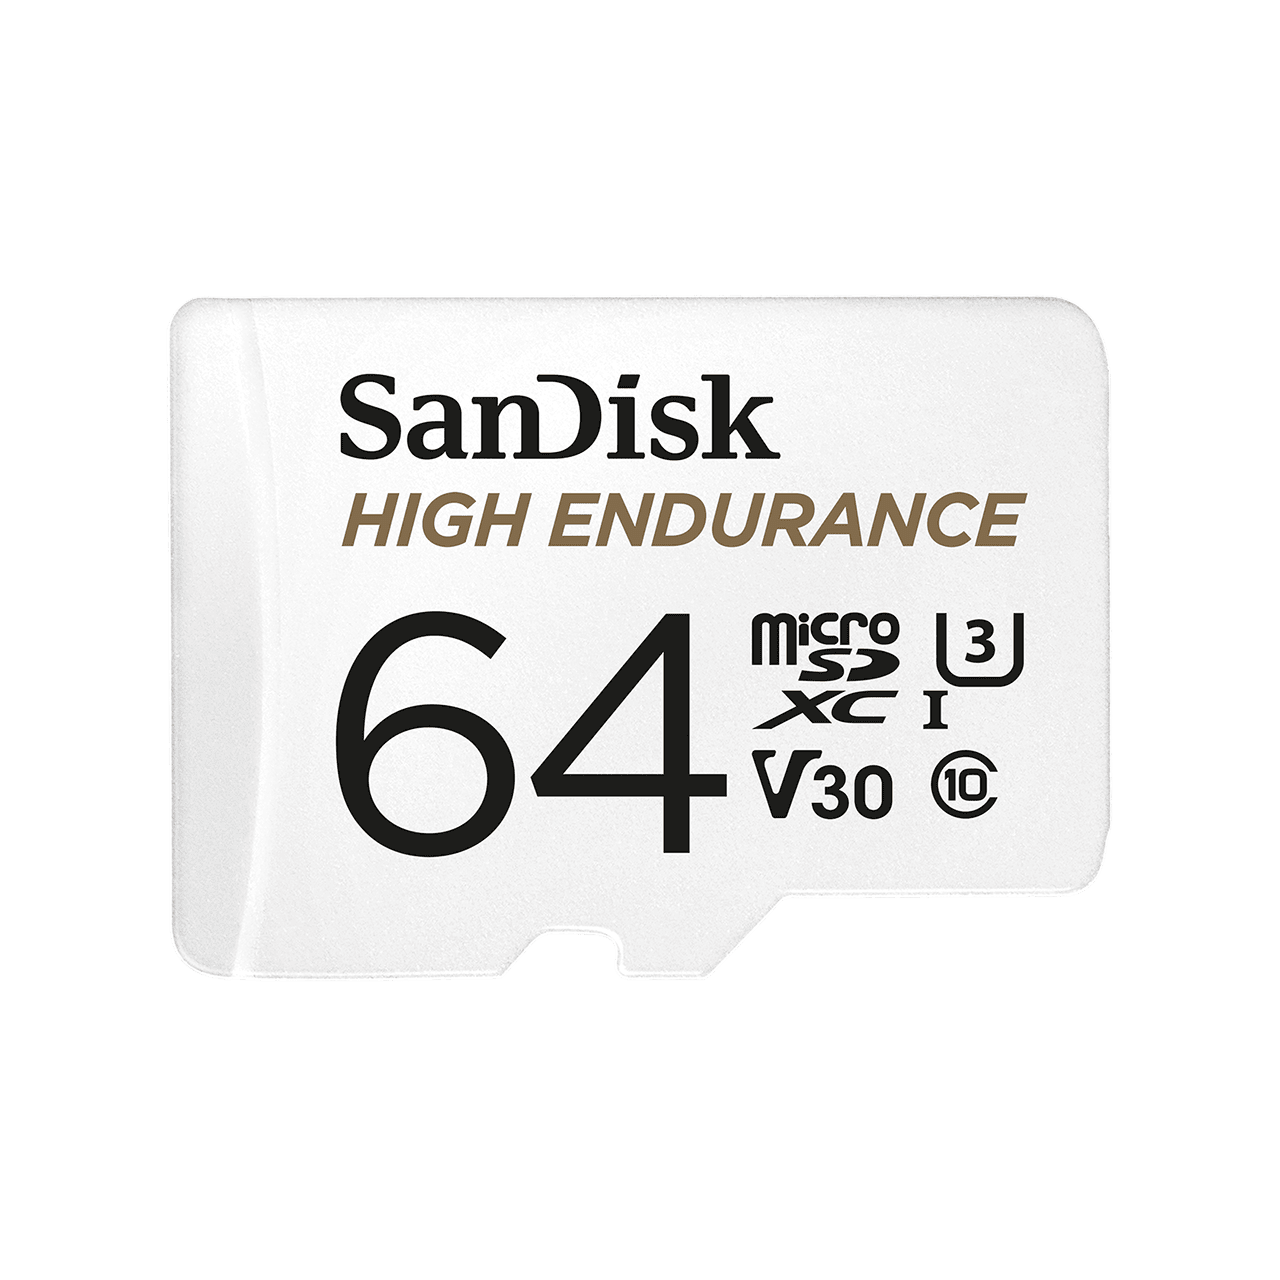 Sandisk High Endurance Microsd Card Western Digital Store